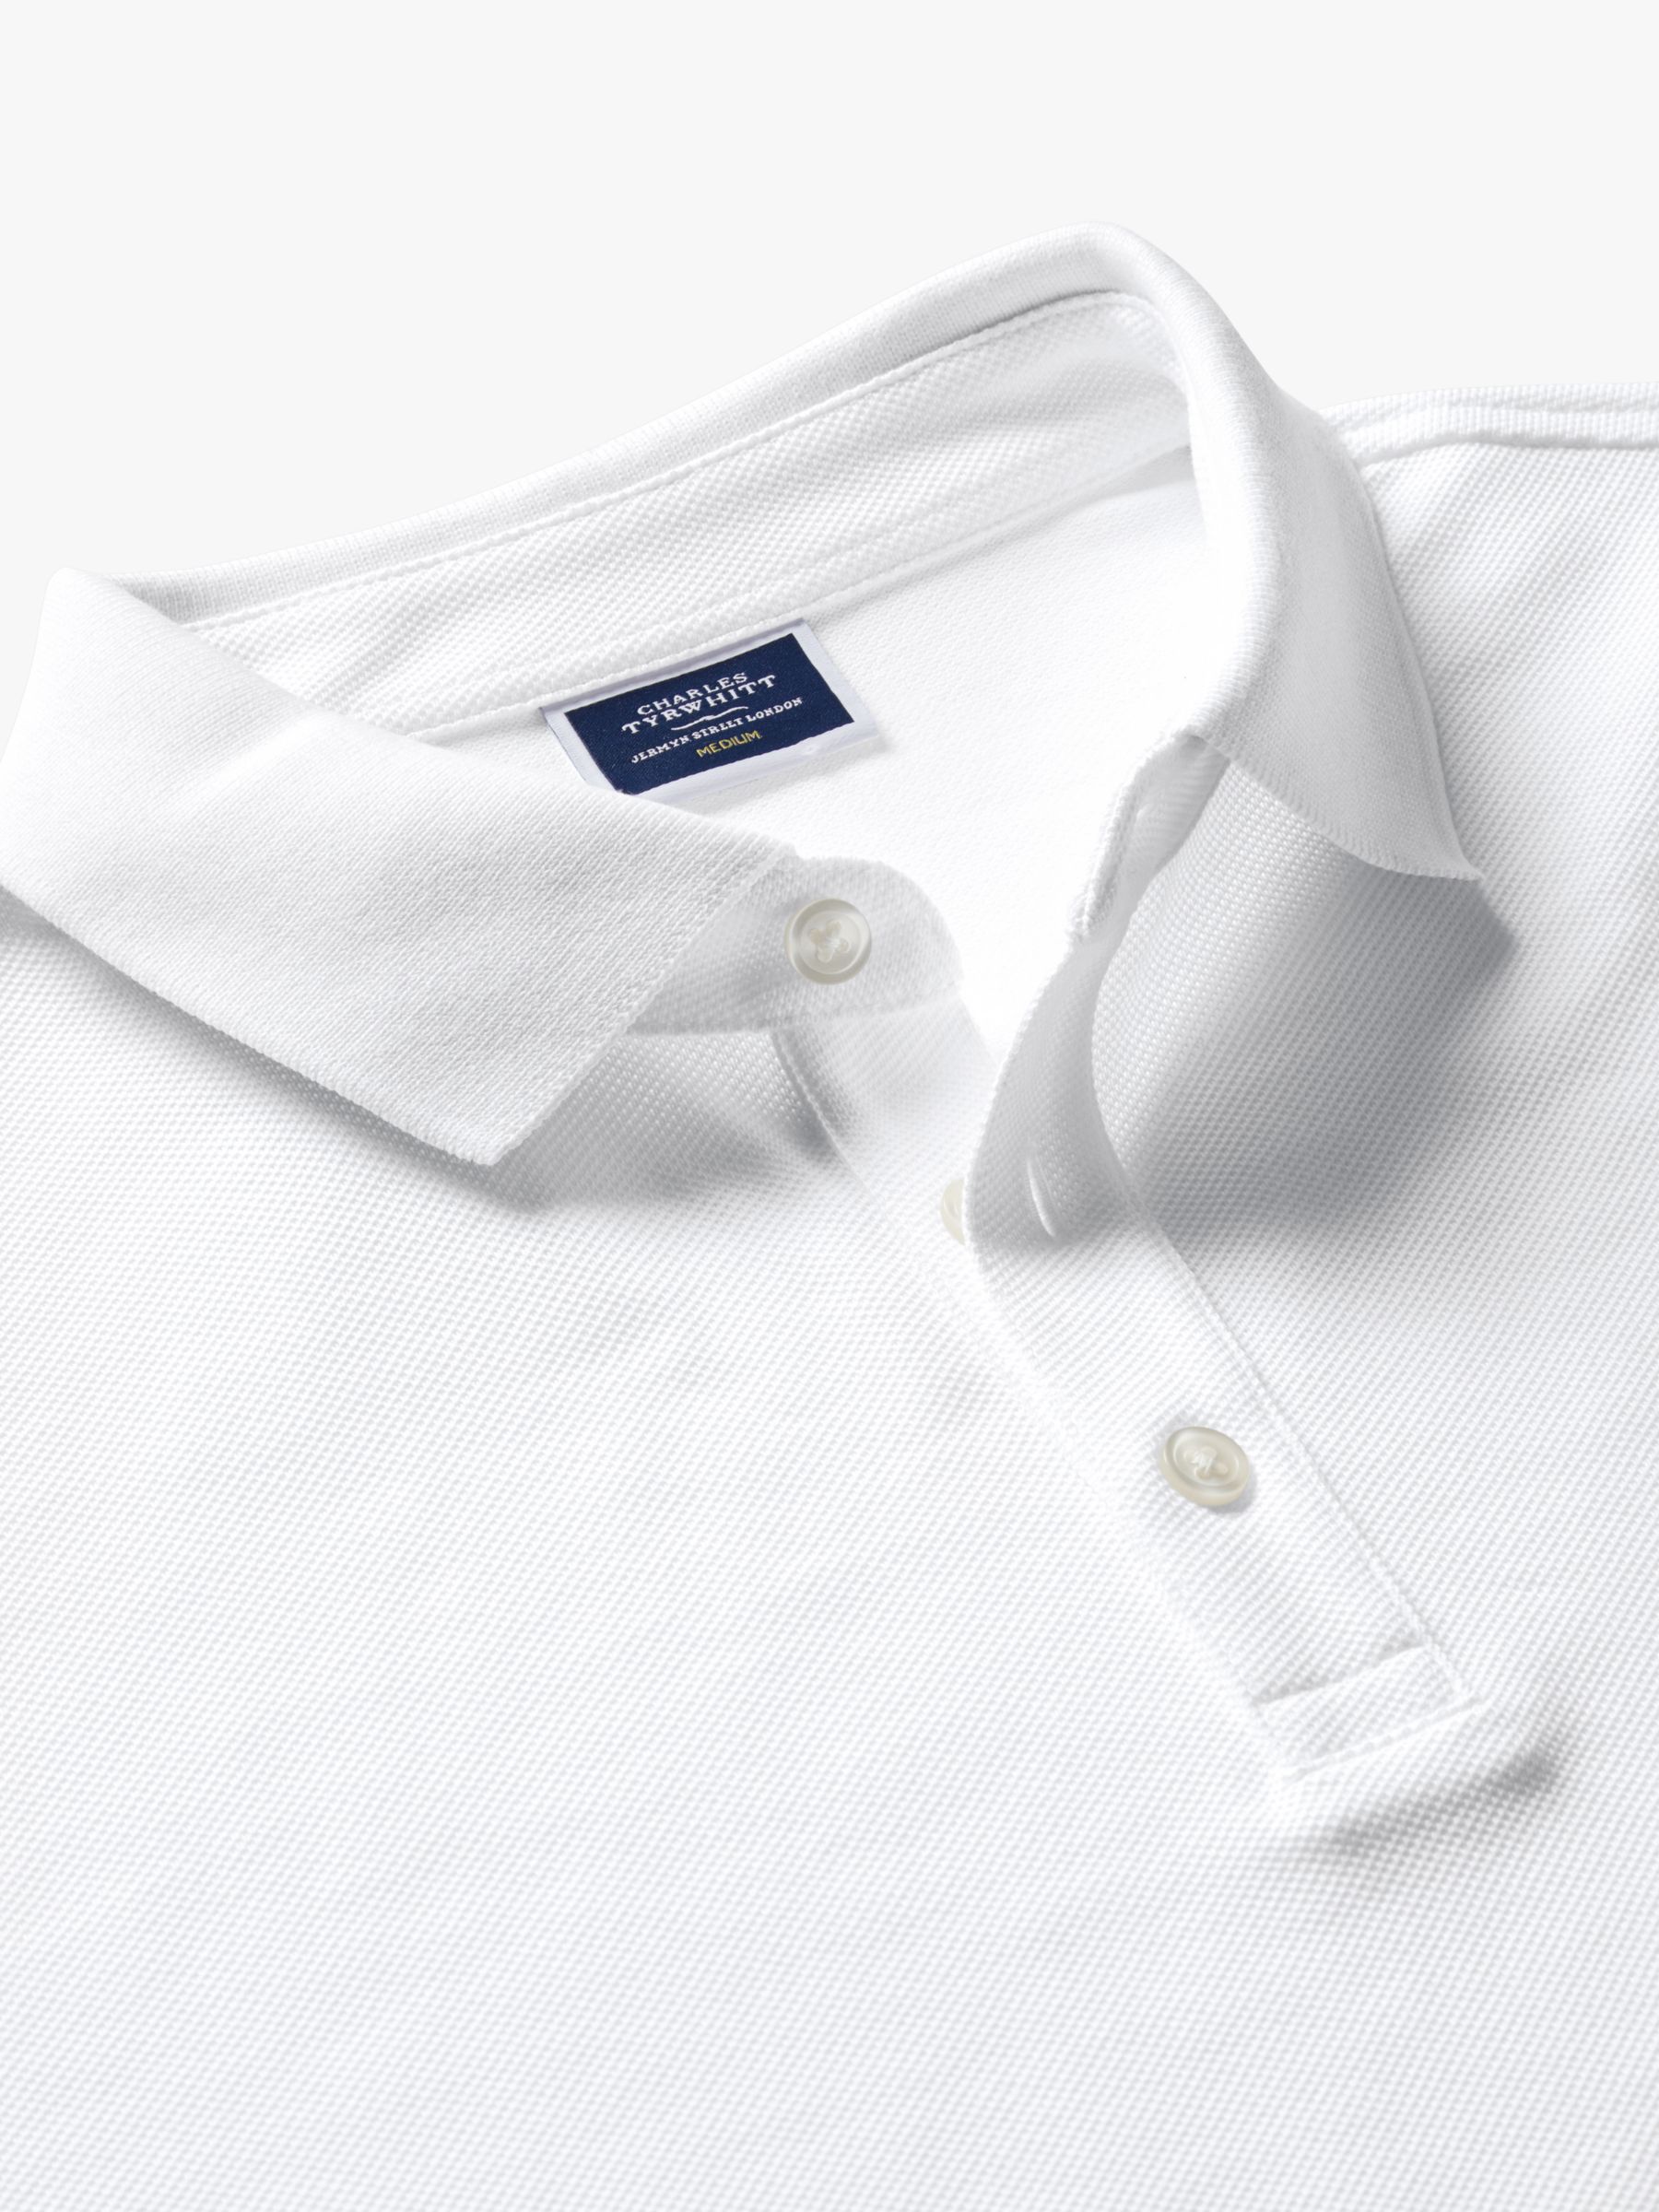 Charles Tyrwhitt Pique Polo Shirt, White at John Lewis & Partners